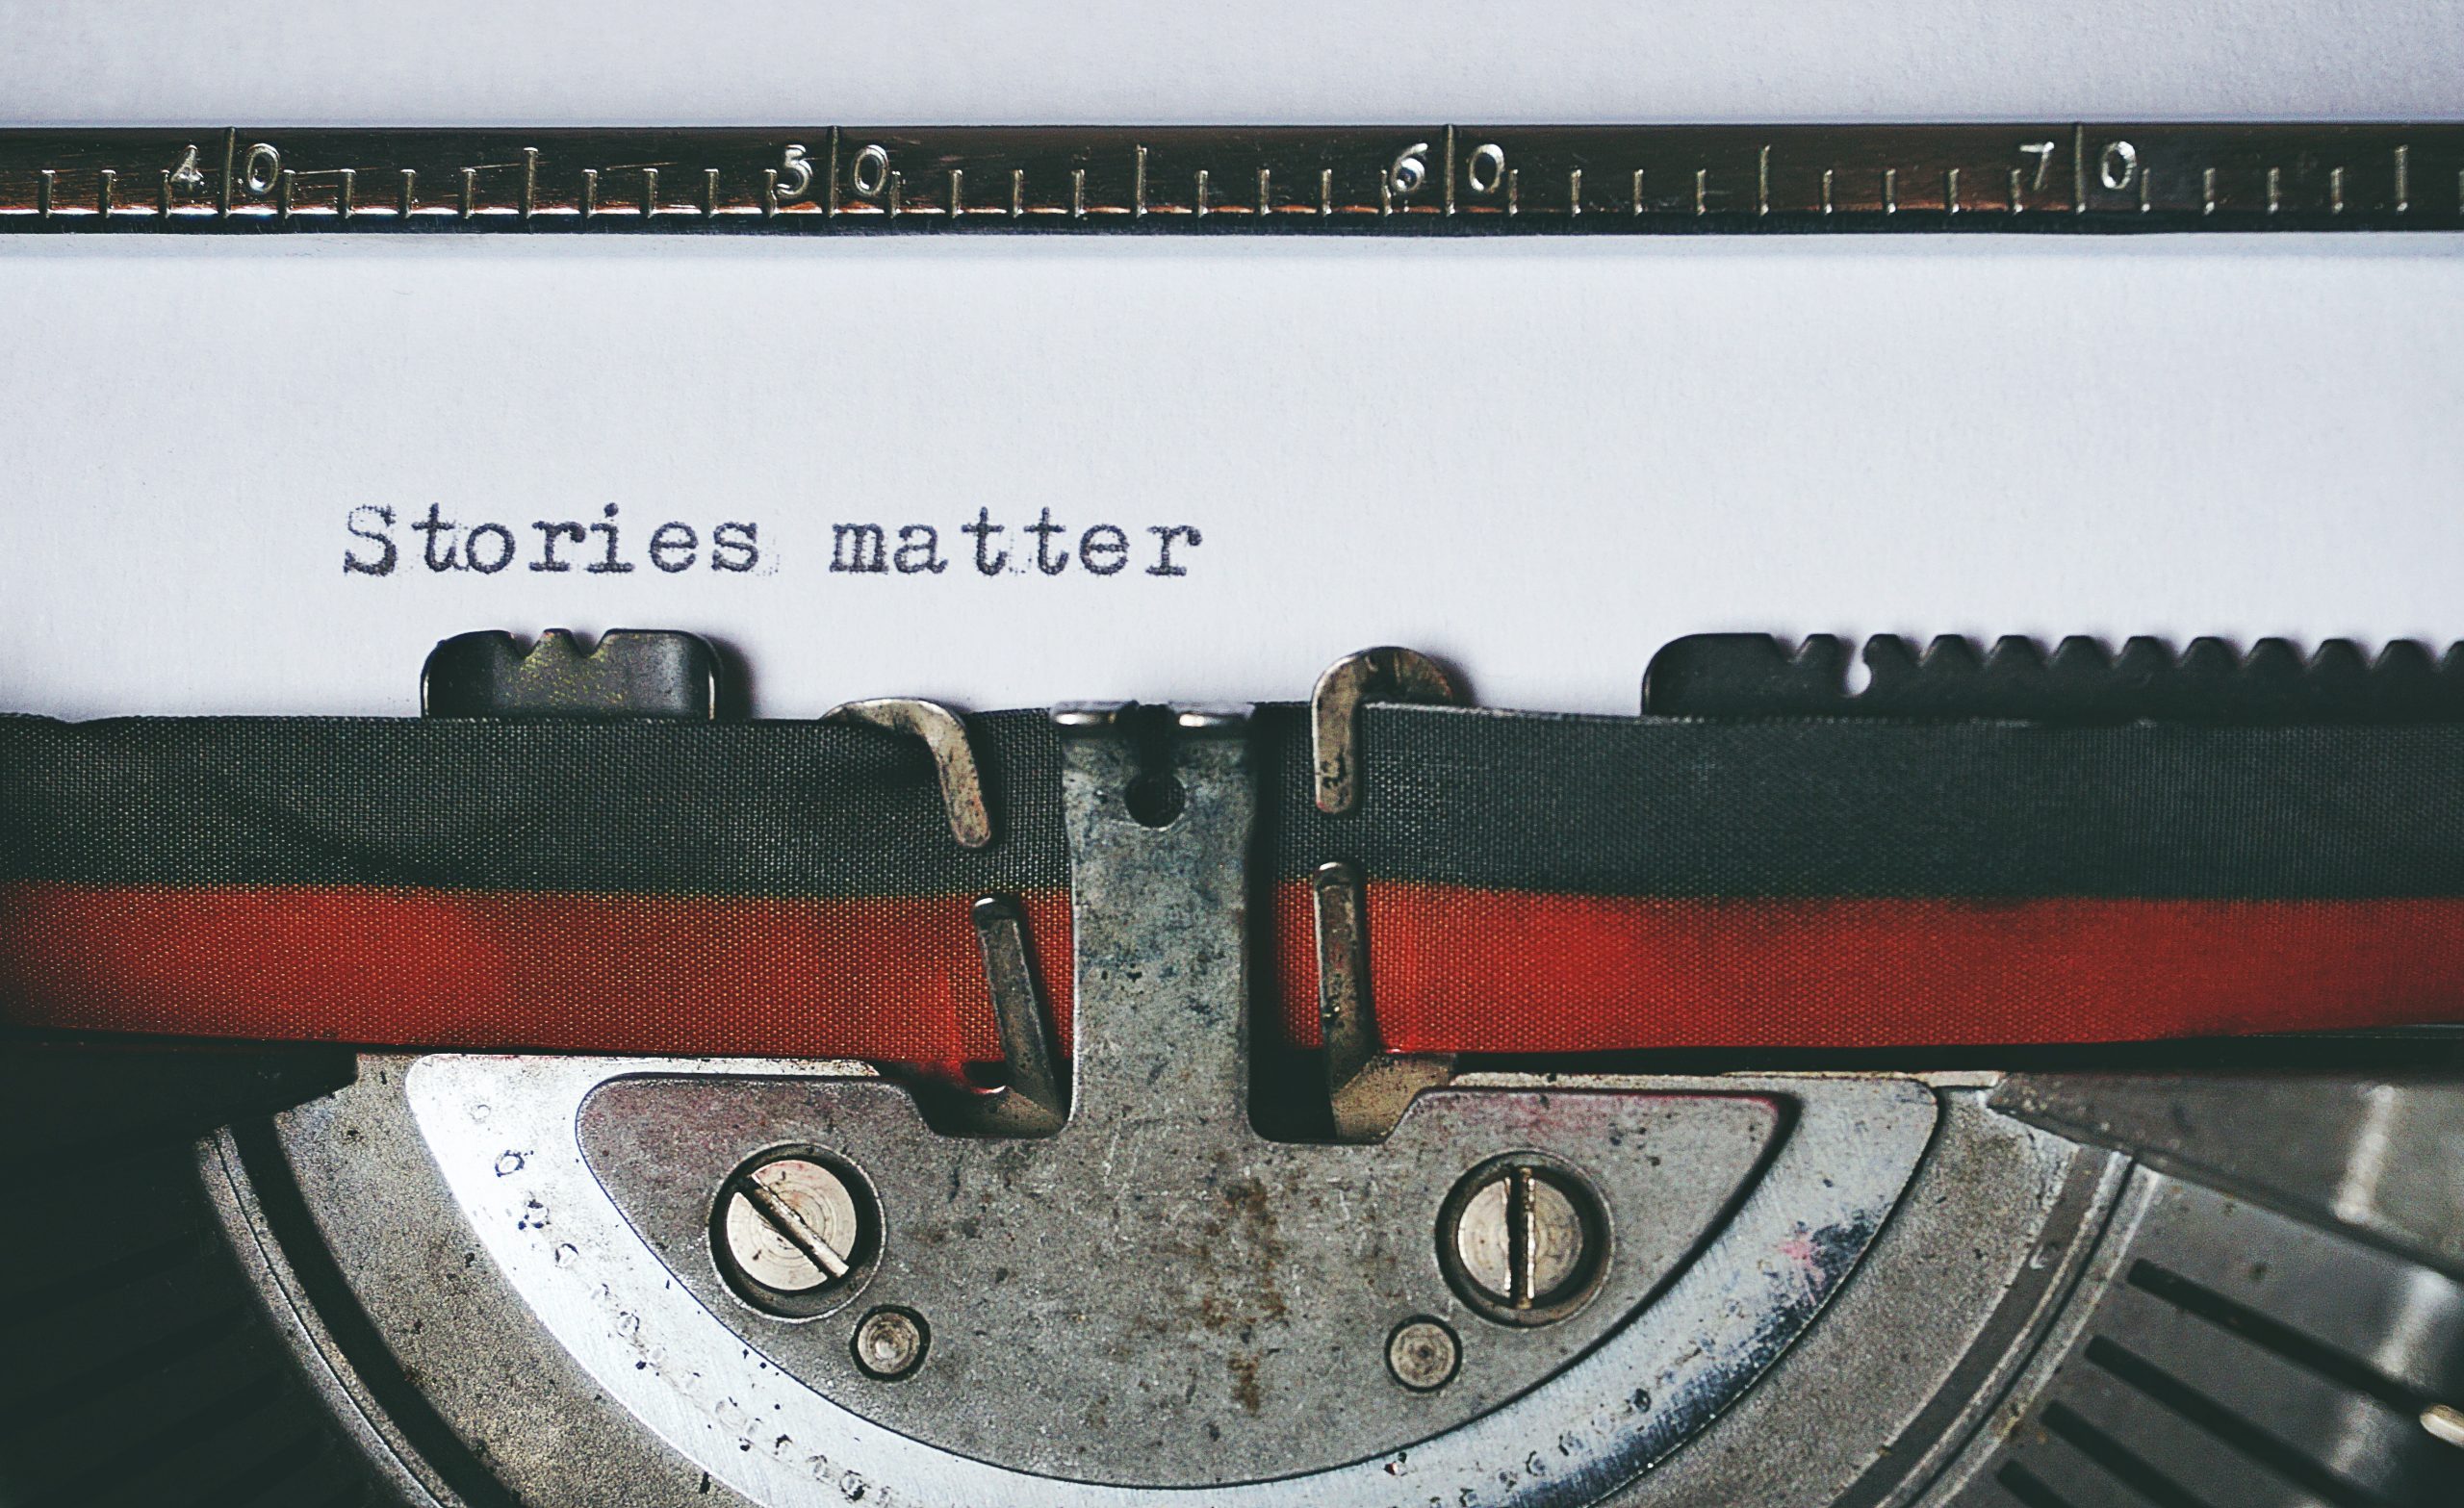 typewriter with words "stories matter"